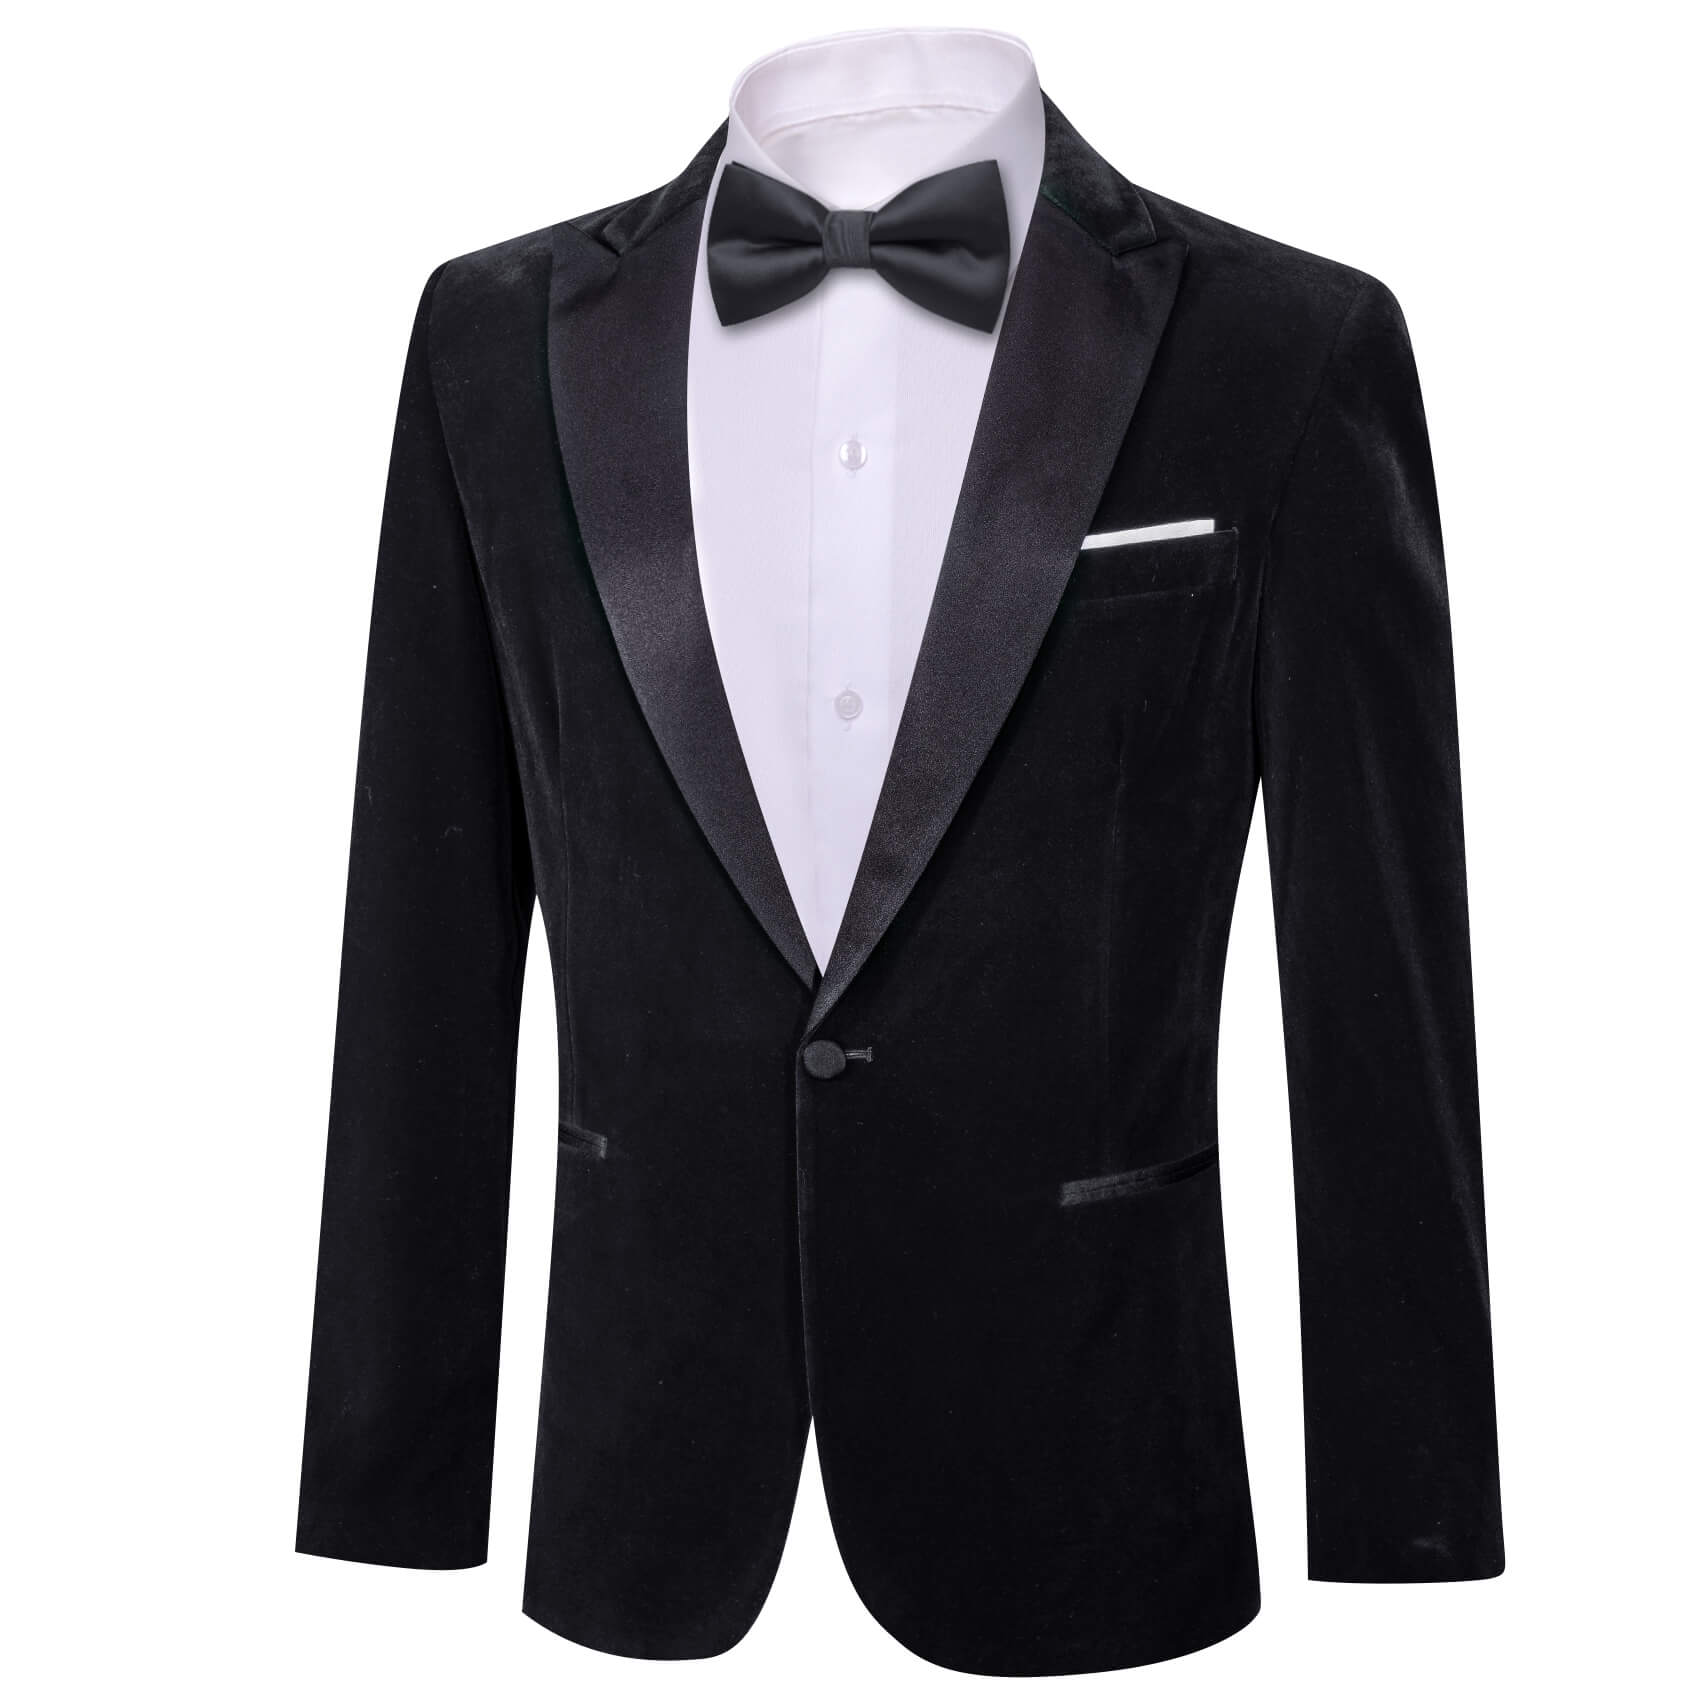 Black velvet suit coat